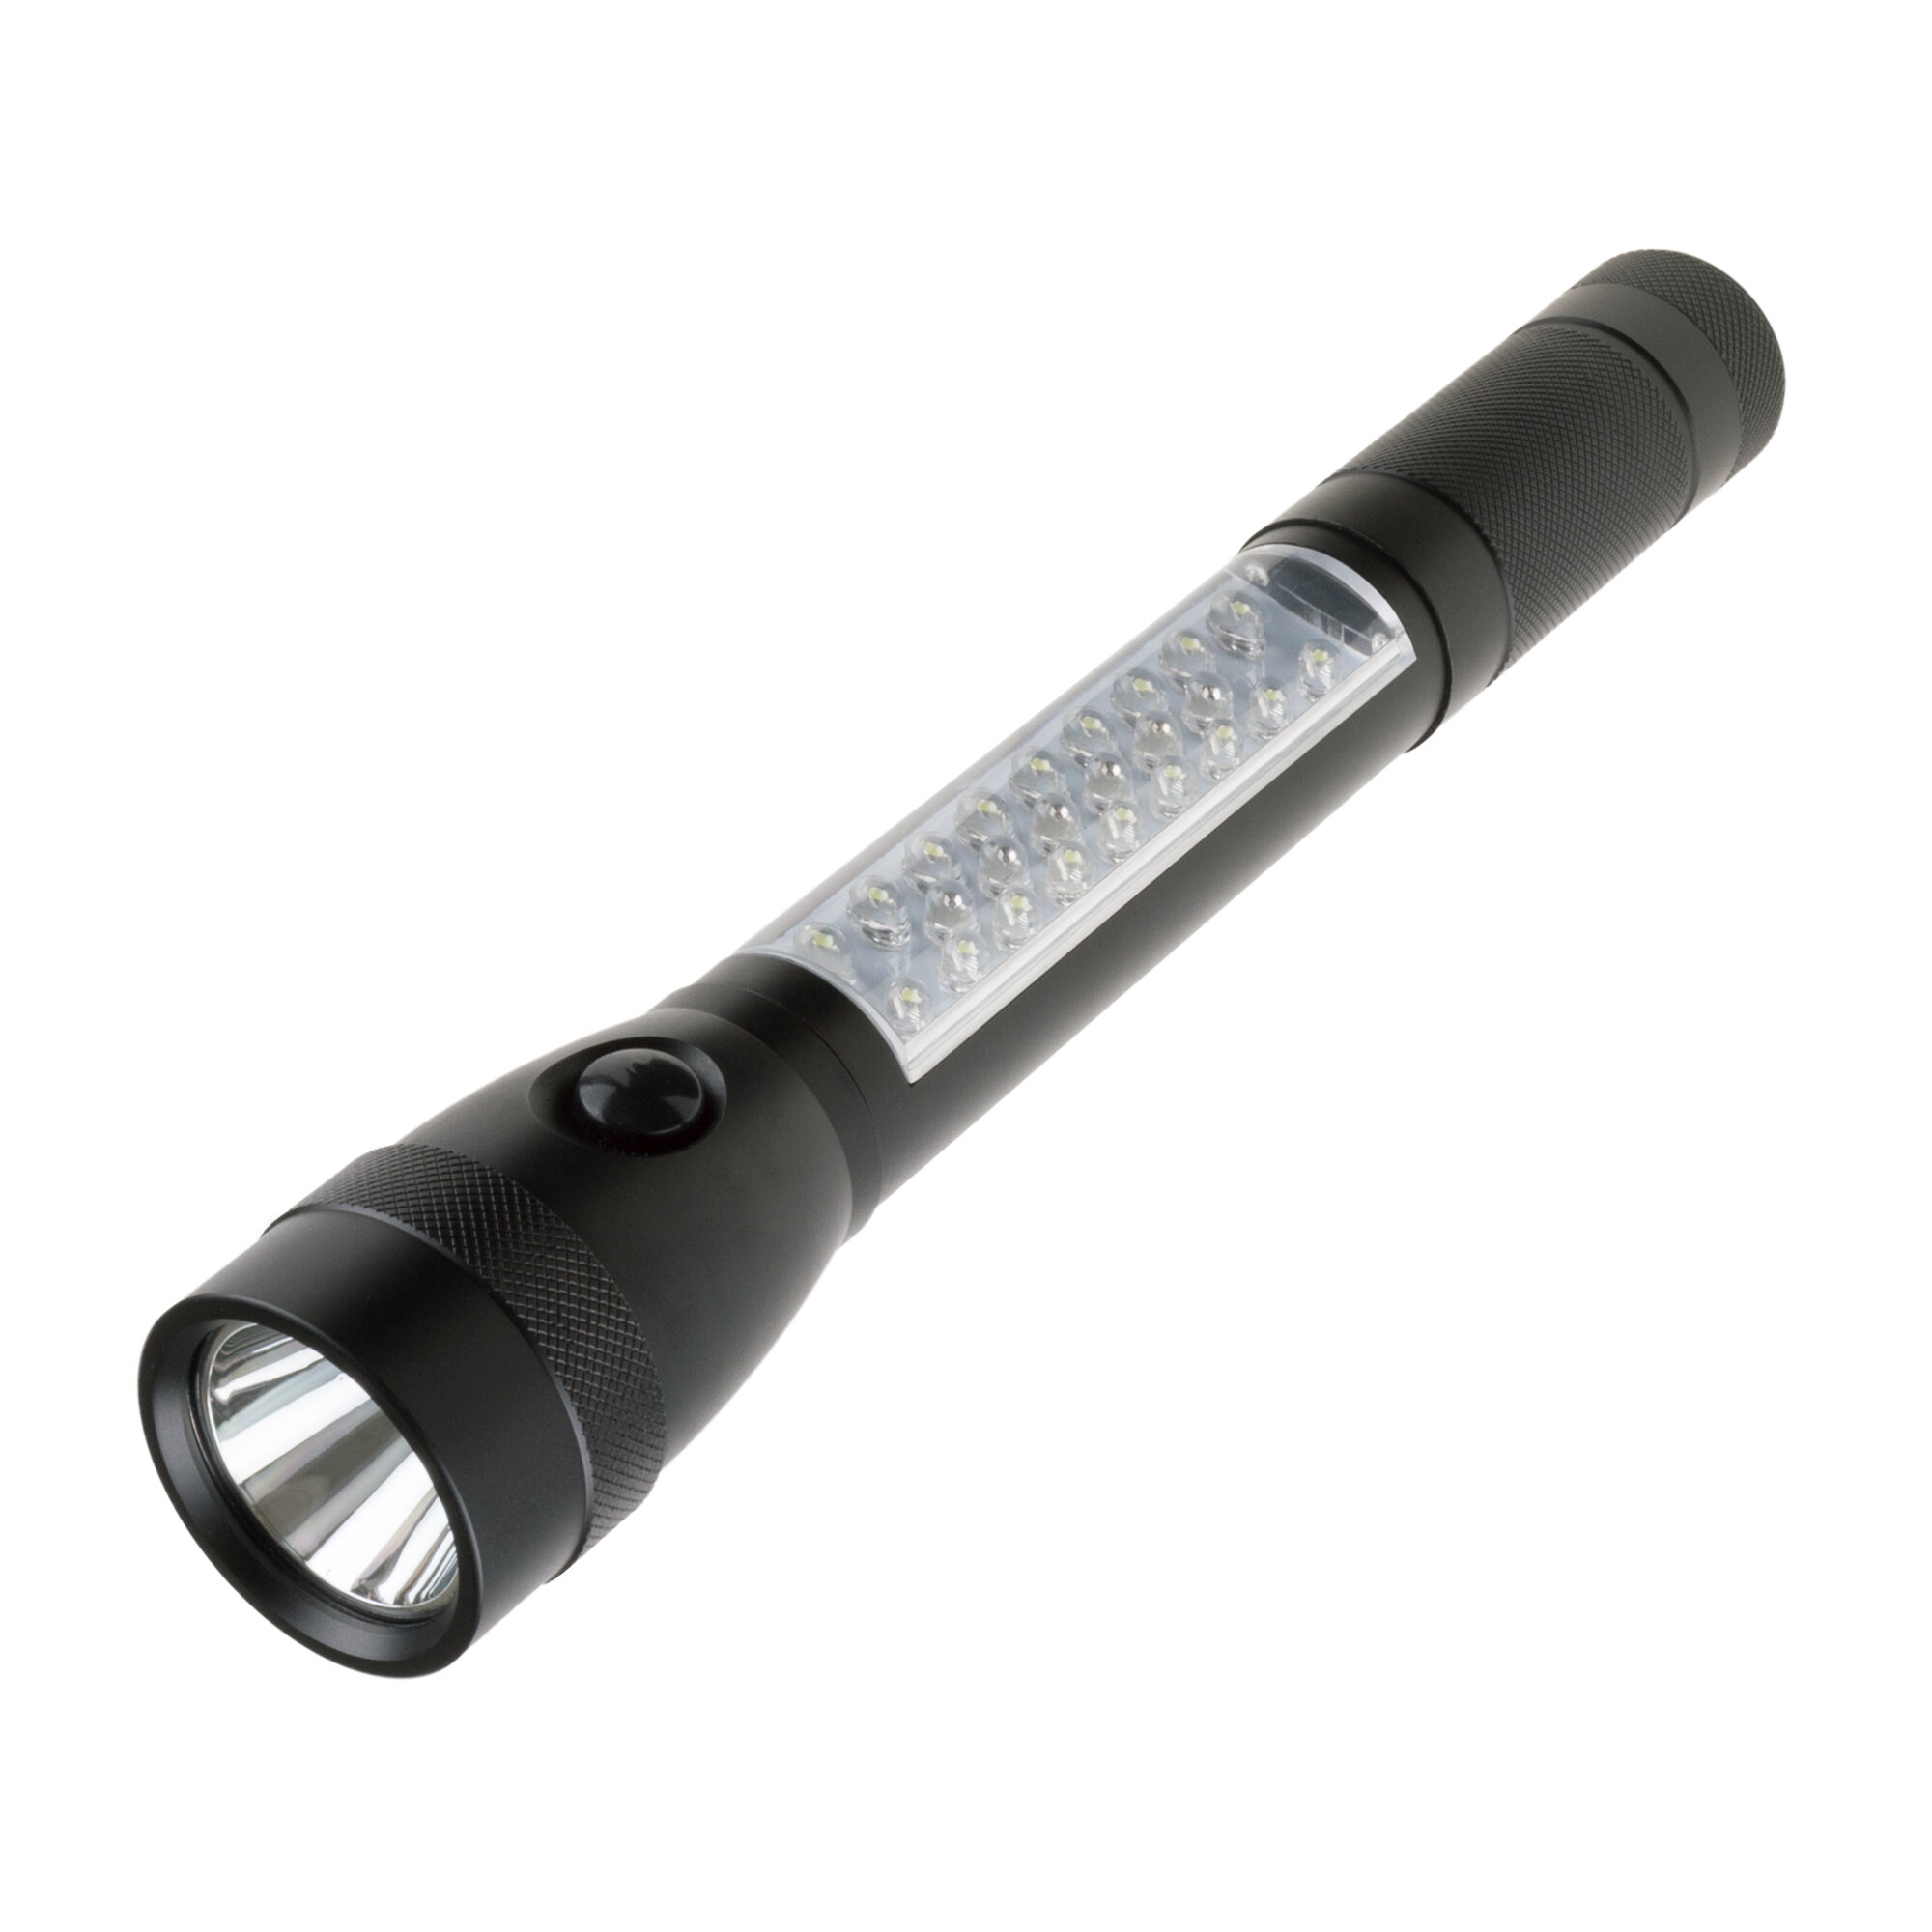 flashlight torch led light